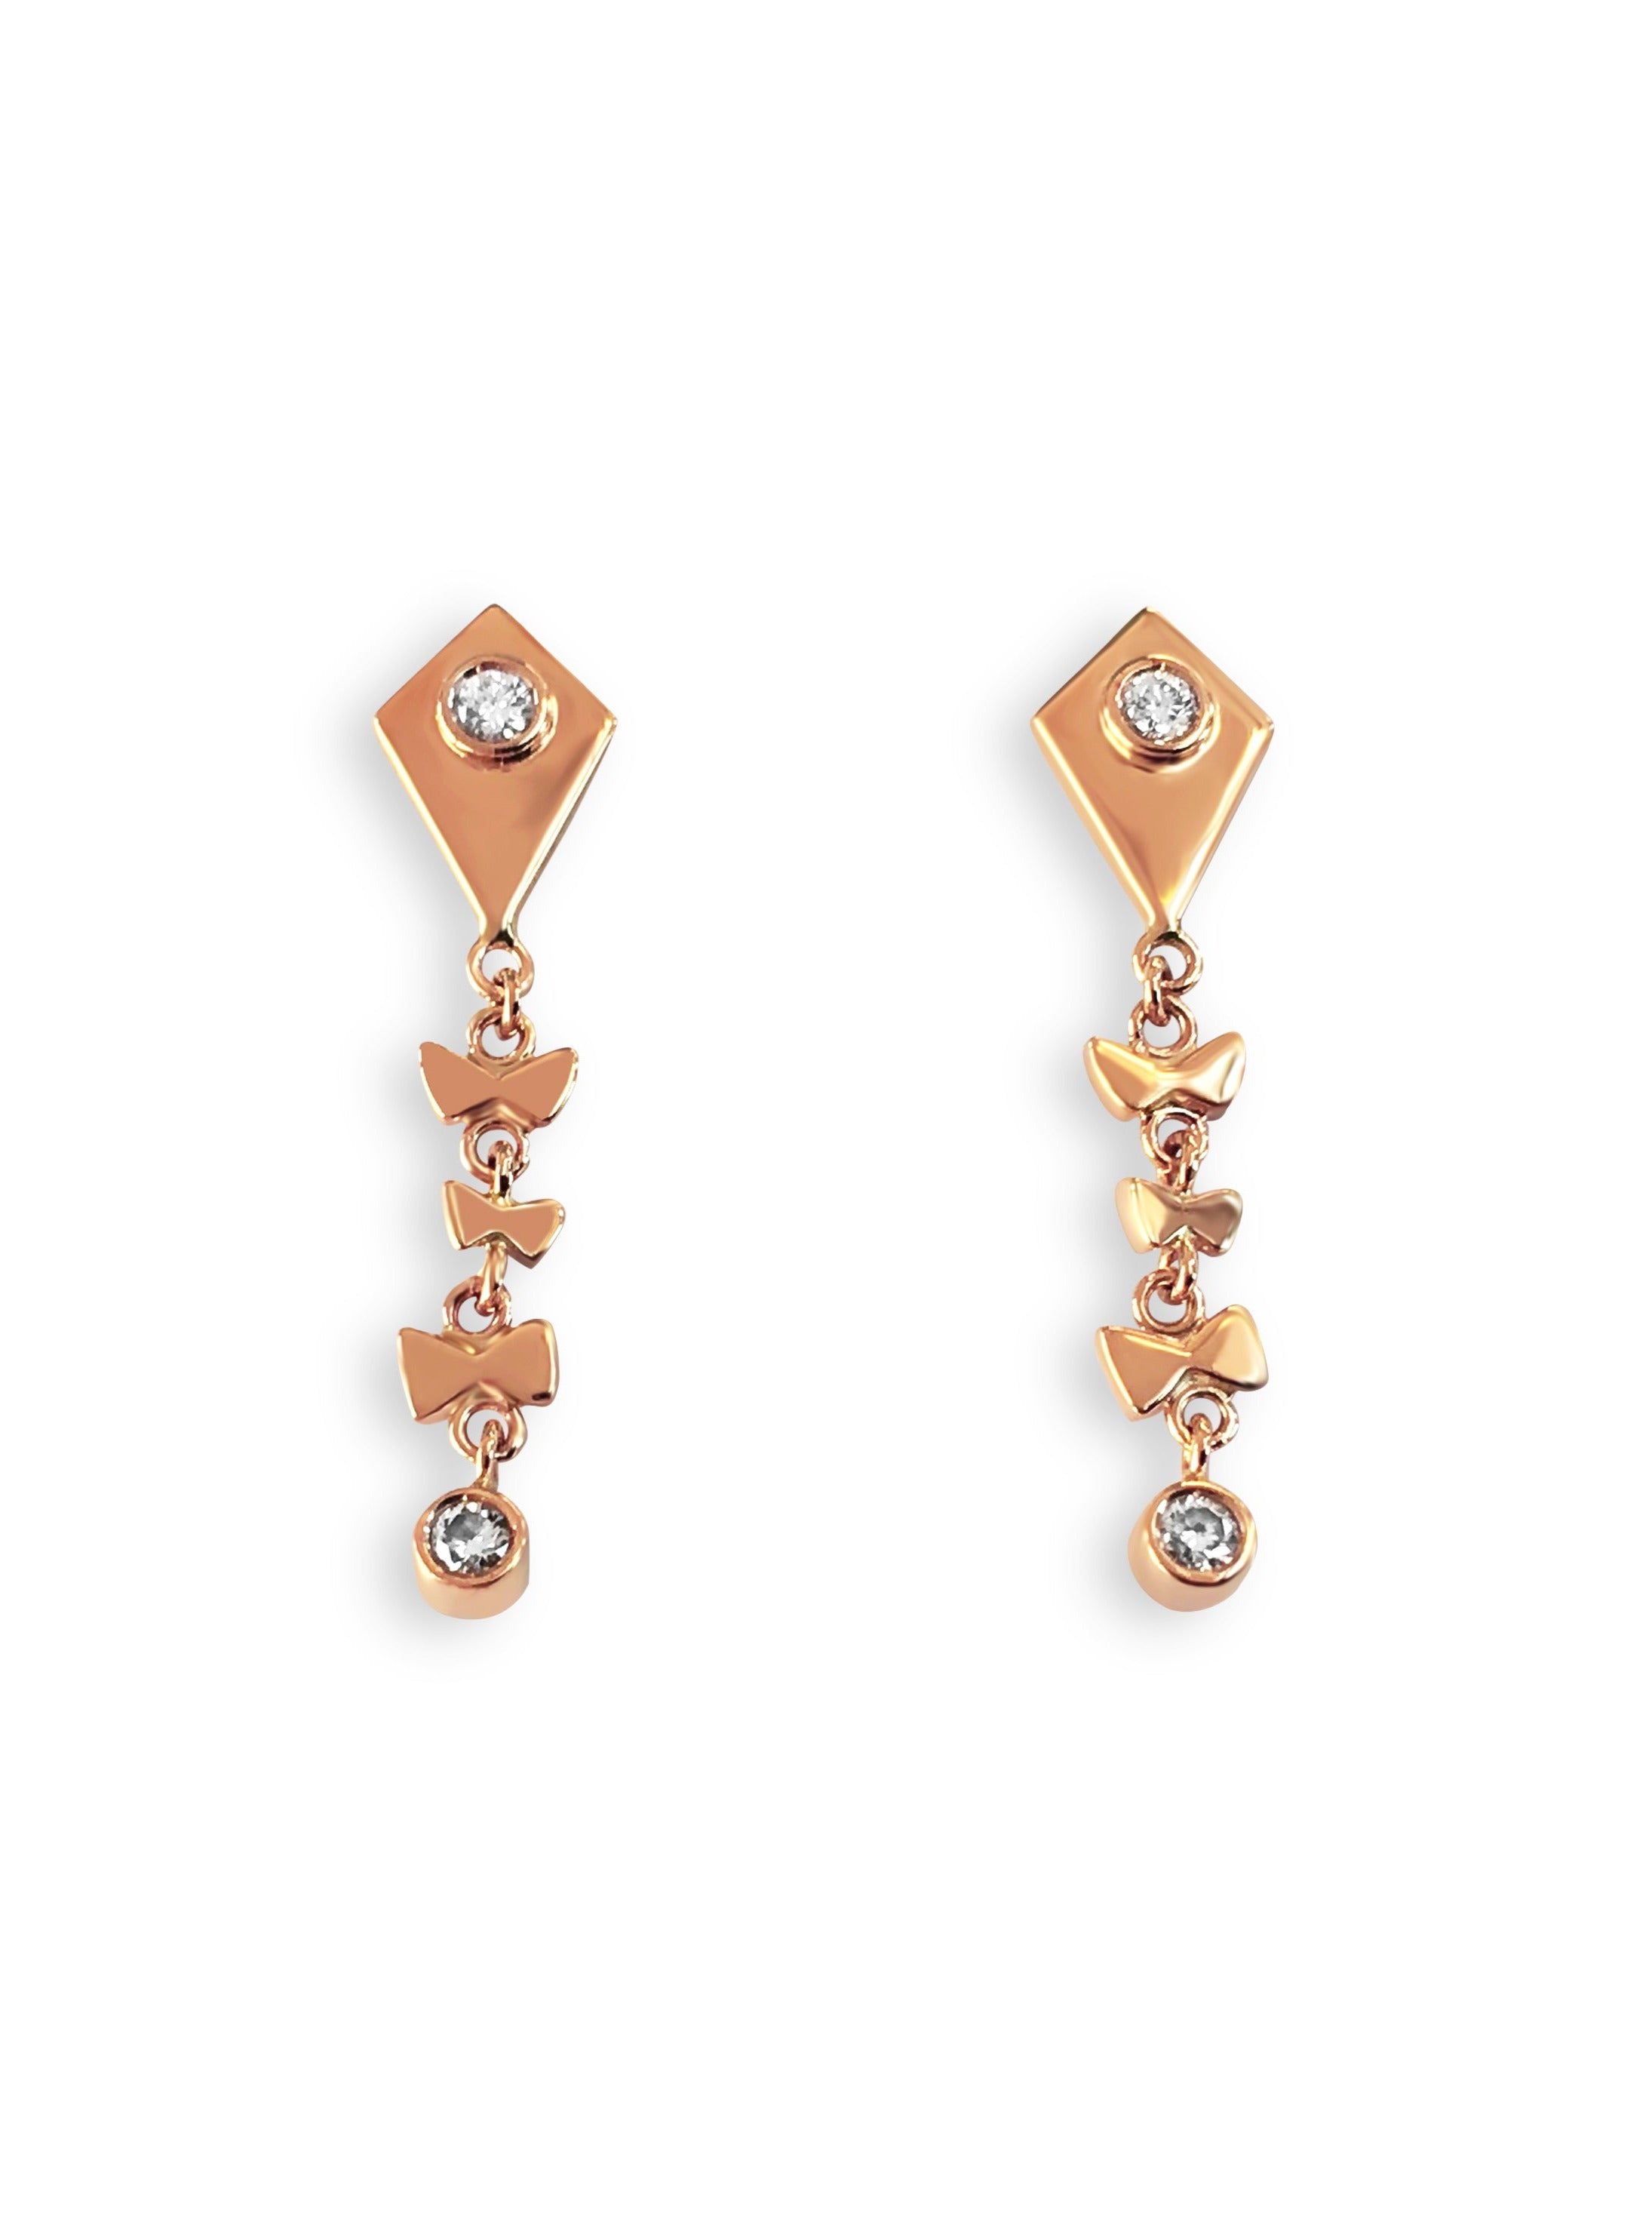 Kite - Earrings with gleaming diamonds